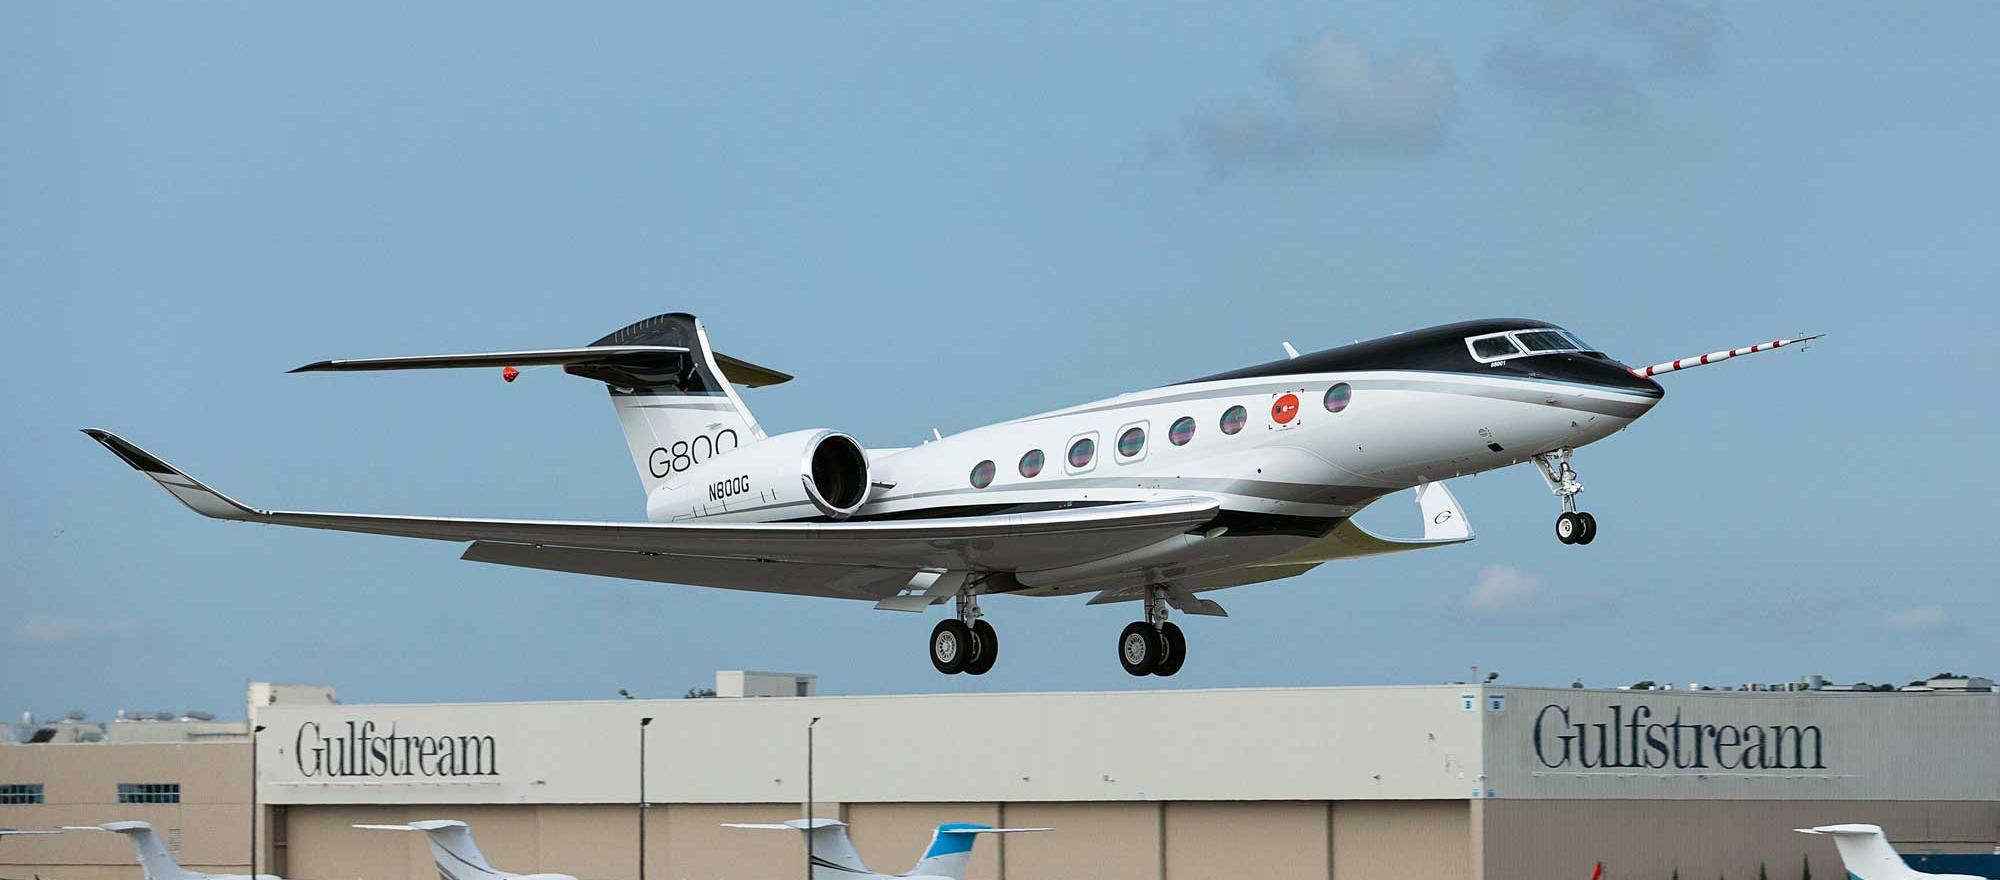 Gulfstream G800 first flight